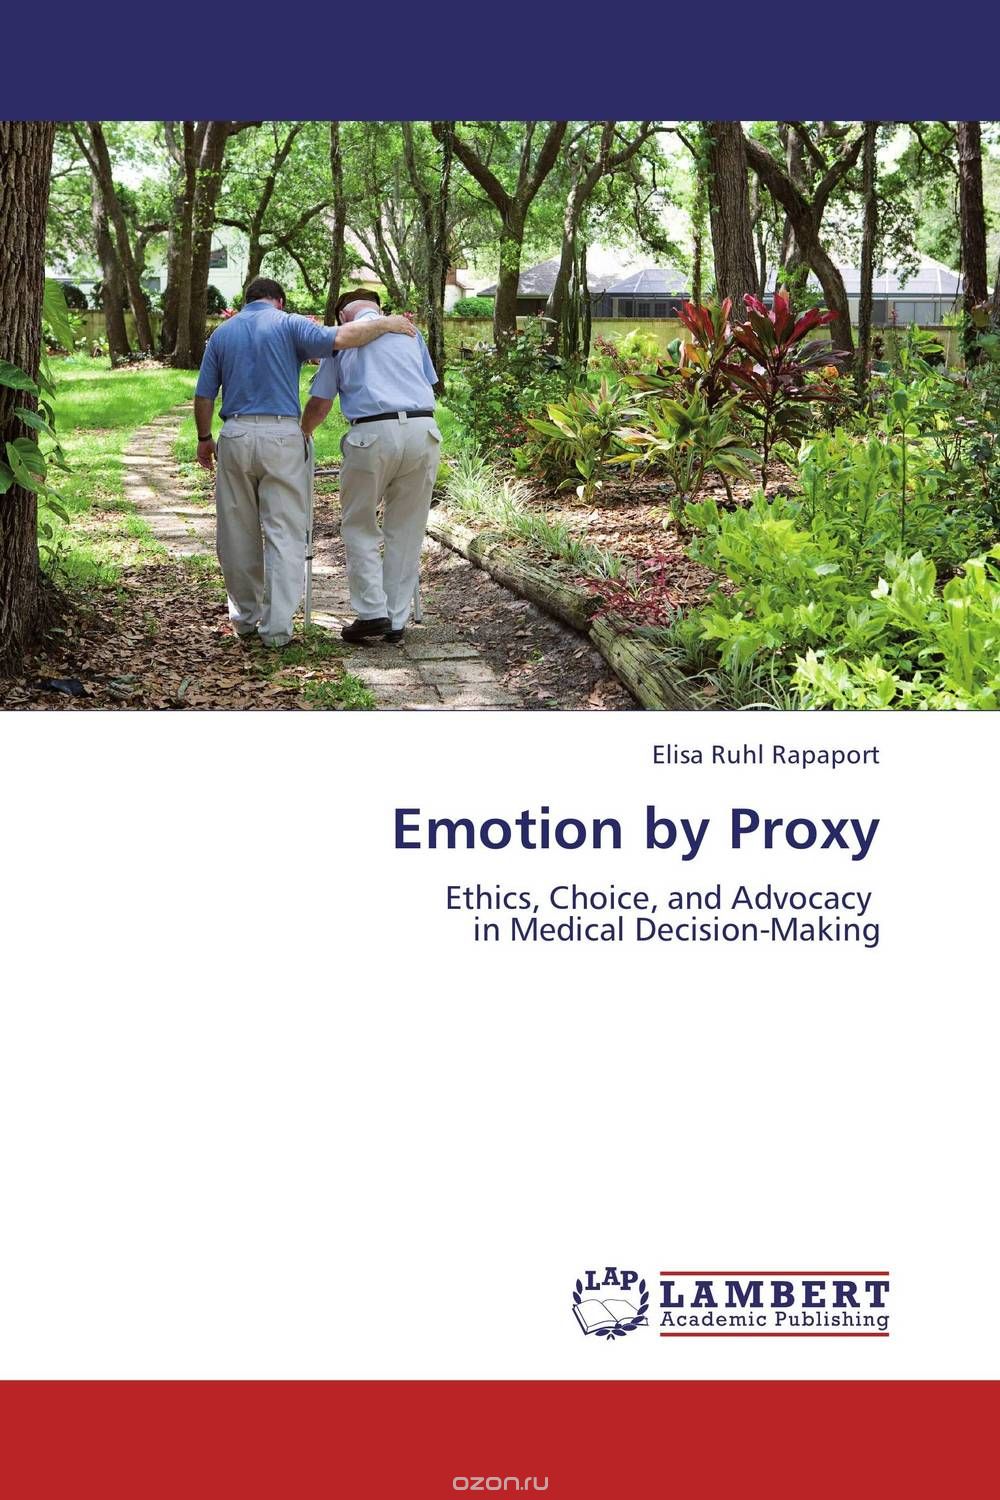 Скачать книгу "Emotion by Proxy"